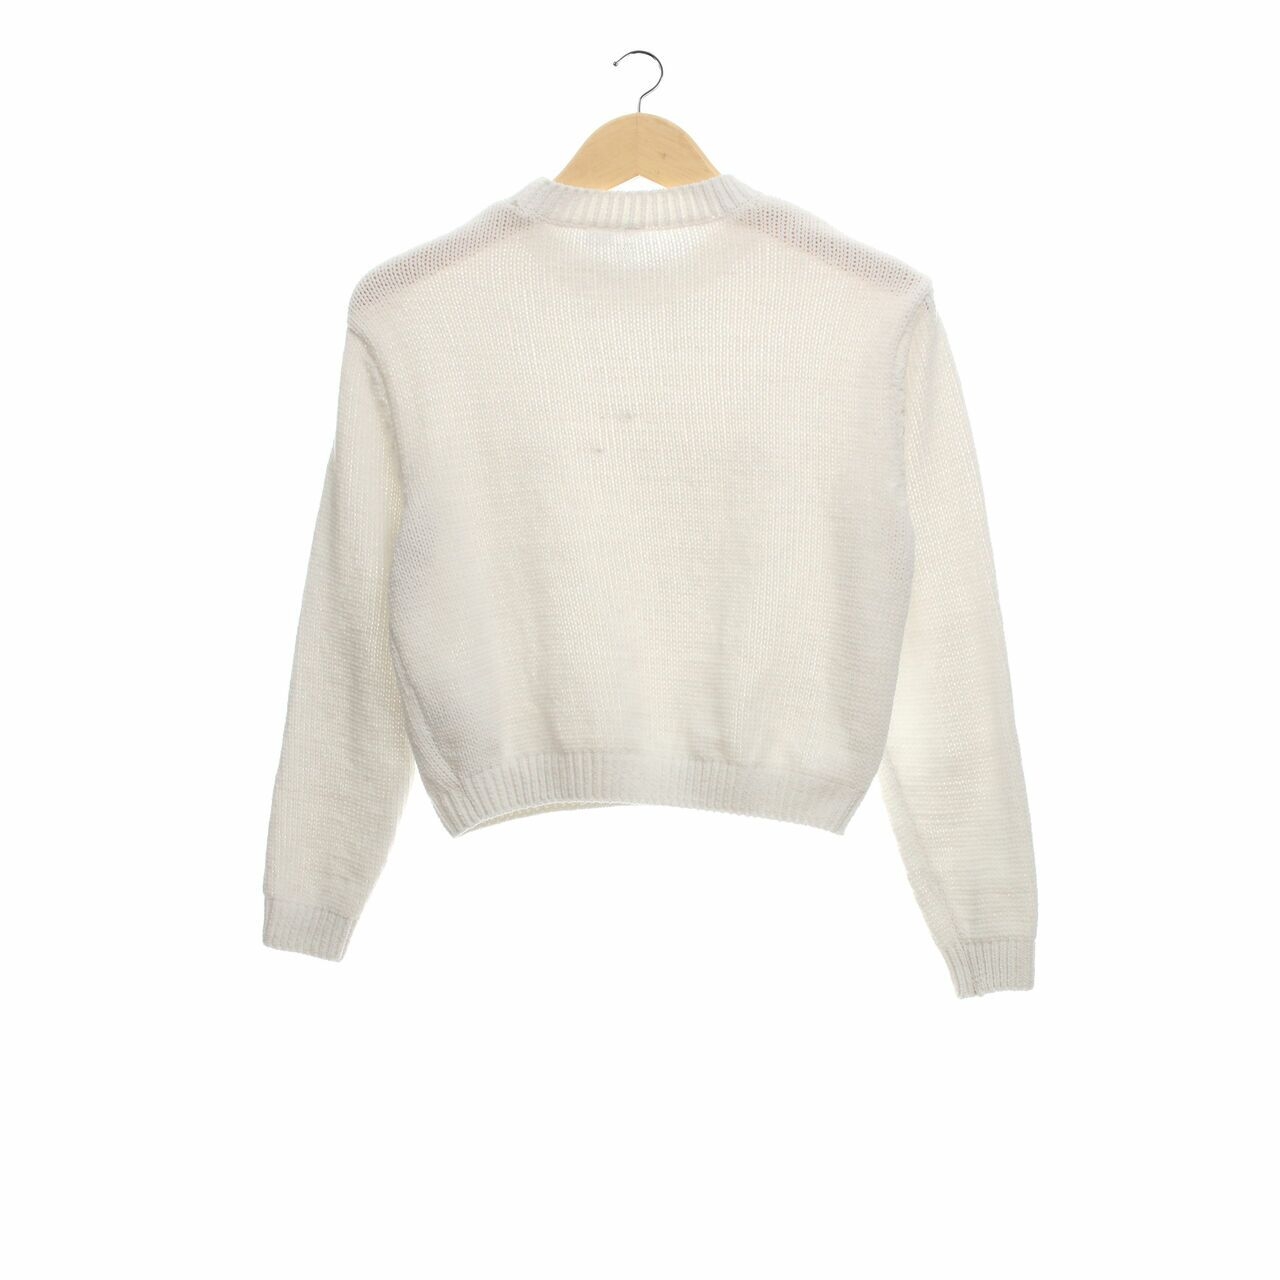 H&M White Sweater